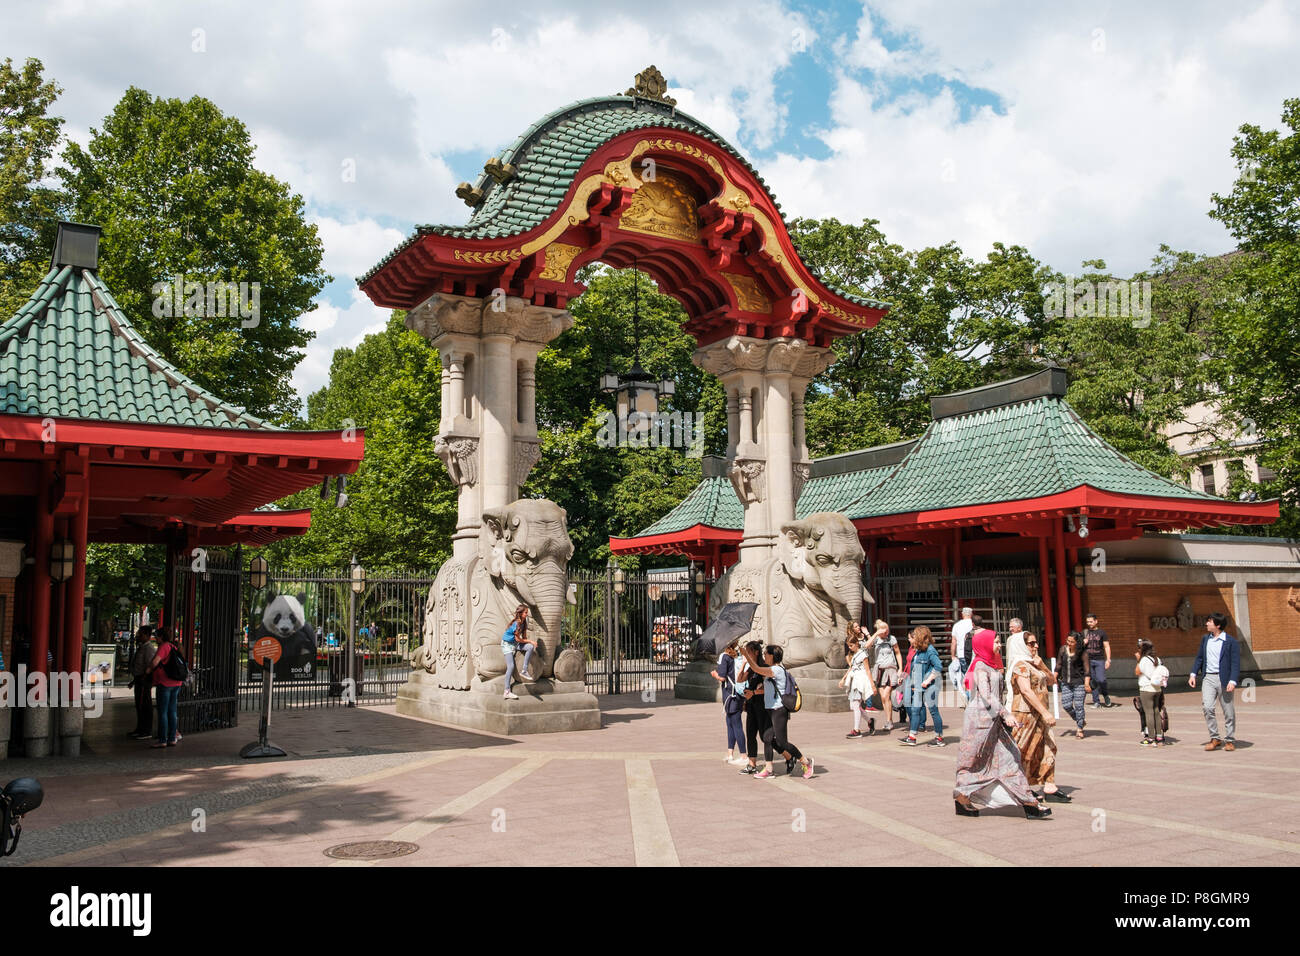 Berlin, Deutschland - Juli 2018: Das Eingangstor (Elefant Tor) Der Berliner Zoo/Tierpark in Berlin, Deutschland Stockfoto